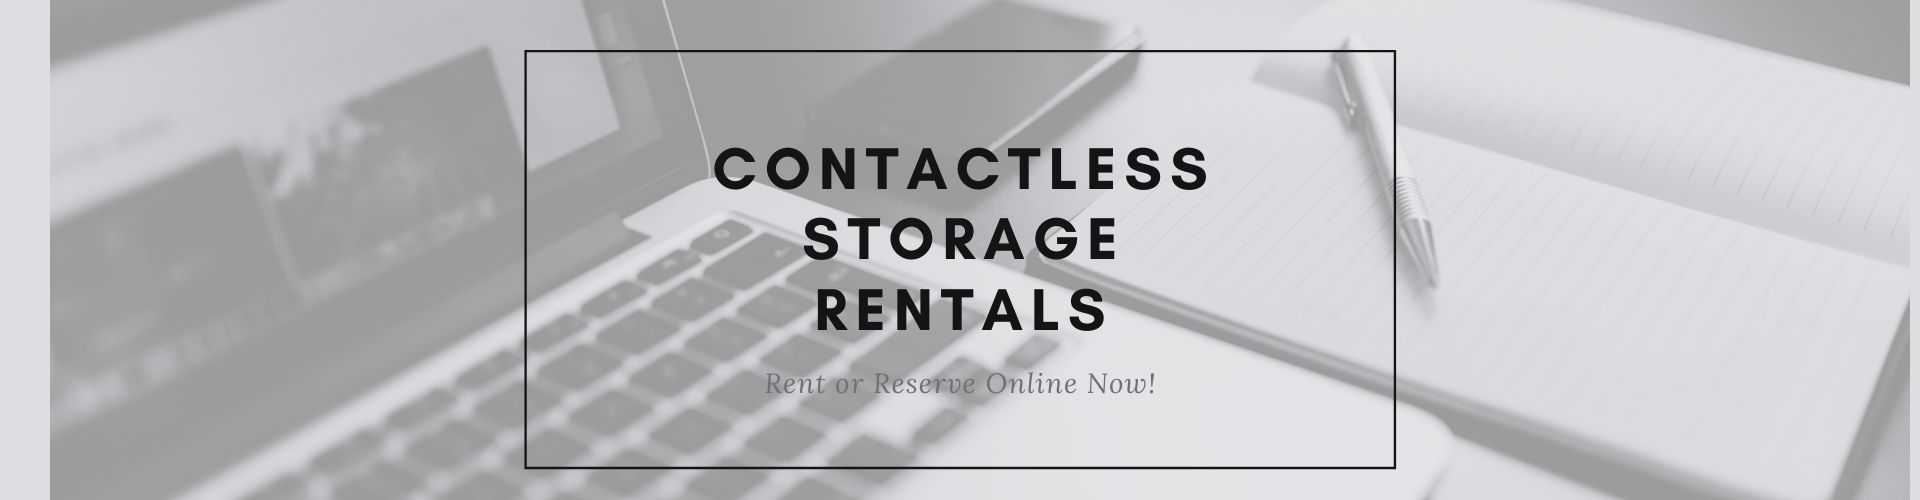 Contactless Storage Rentals in Greensboro NC